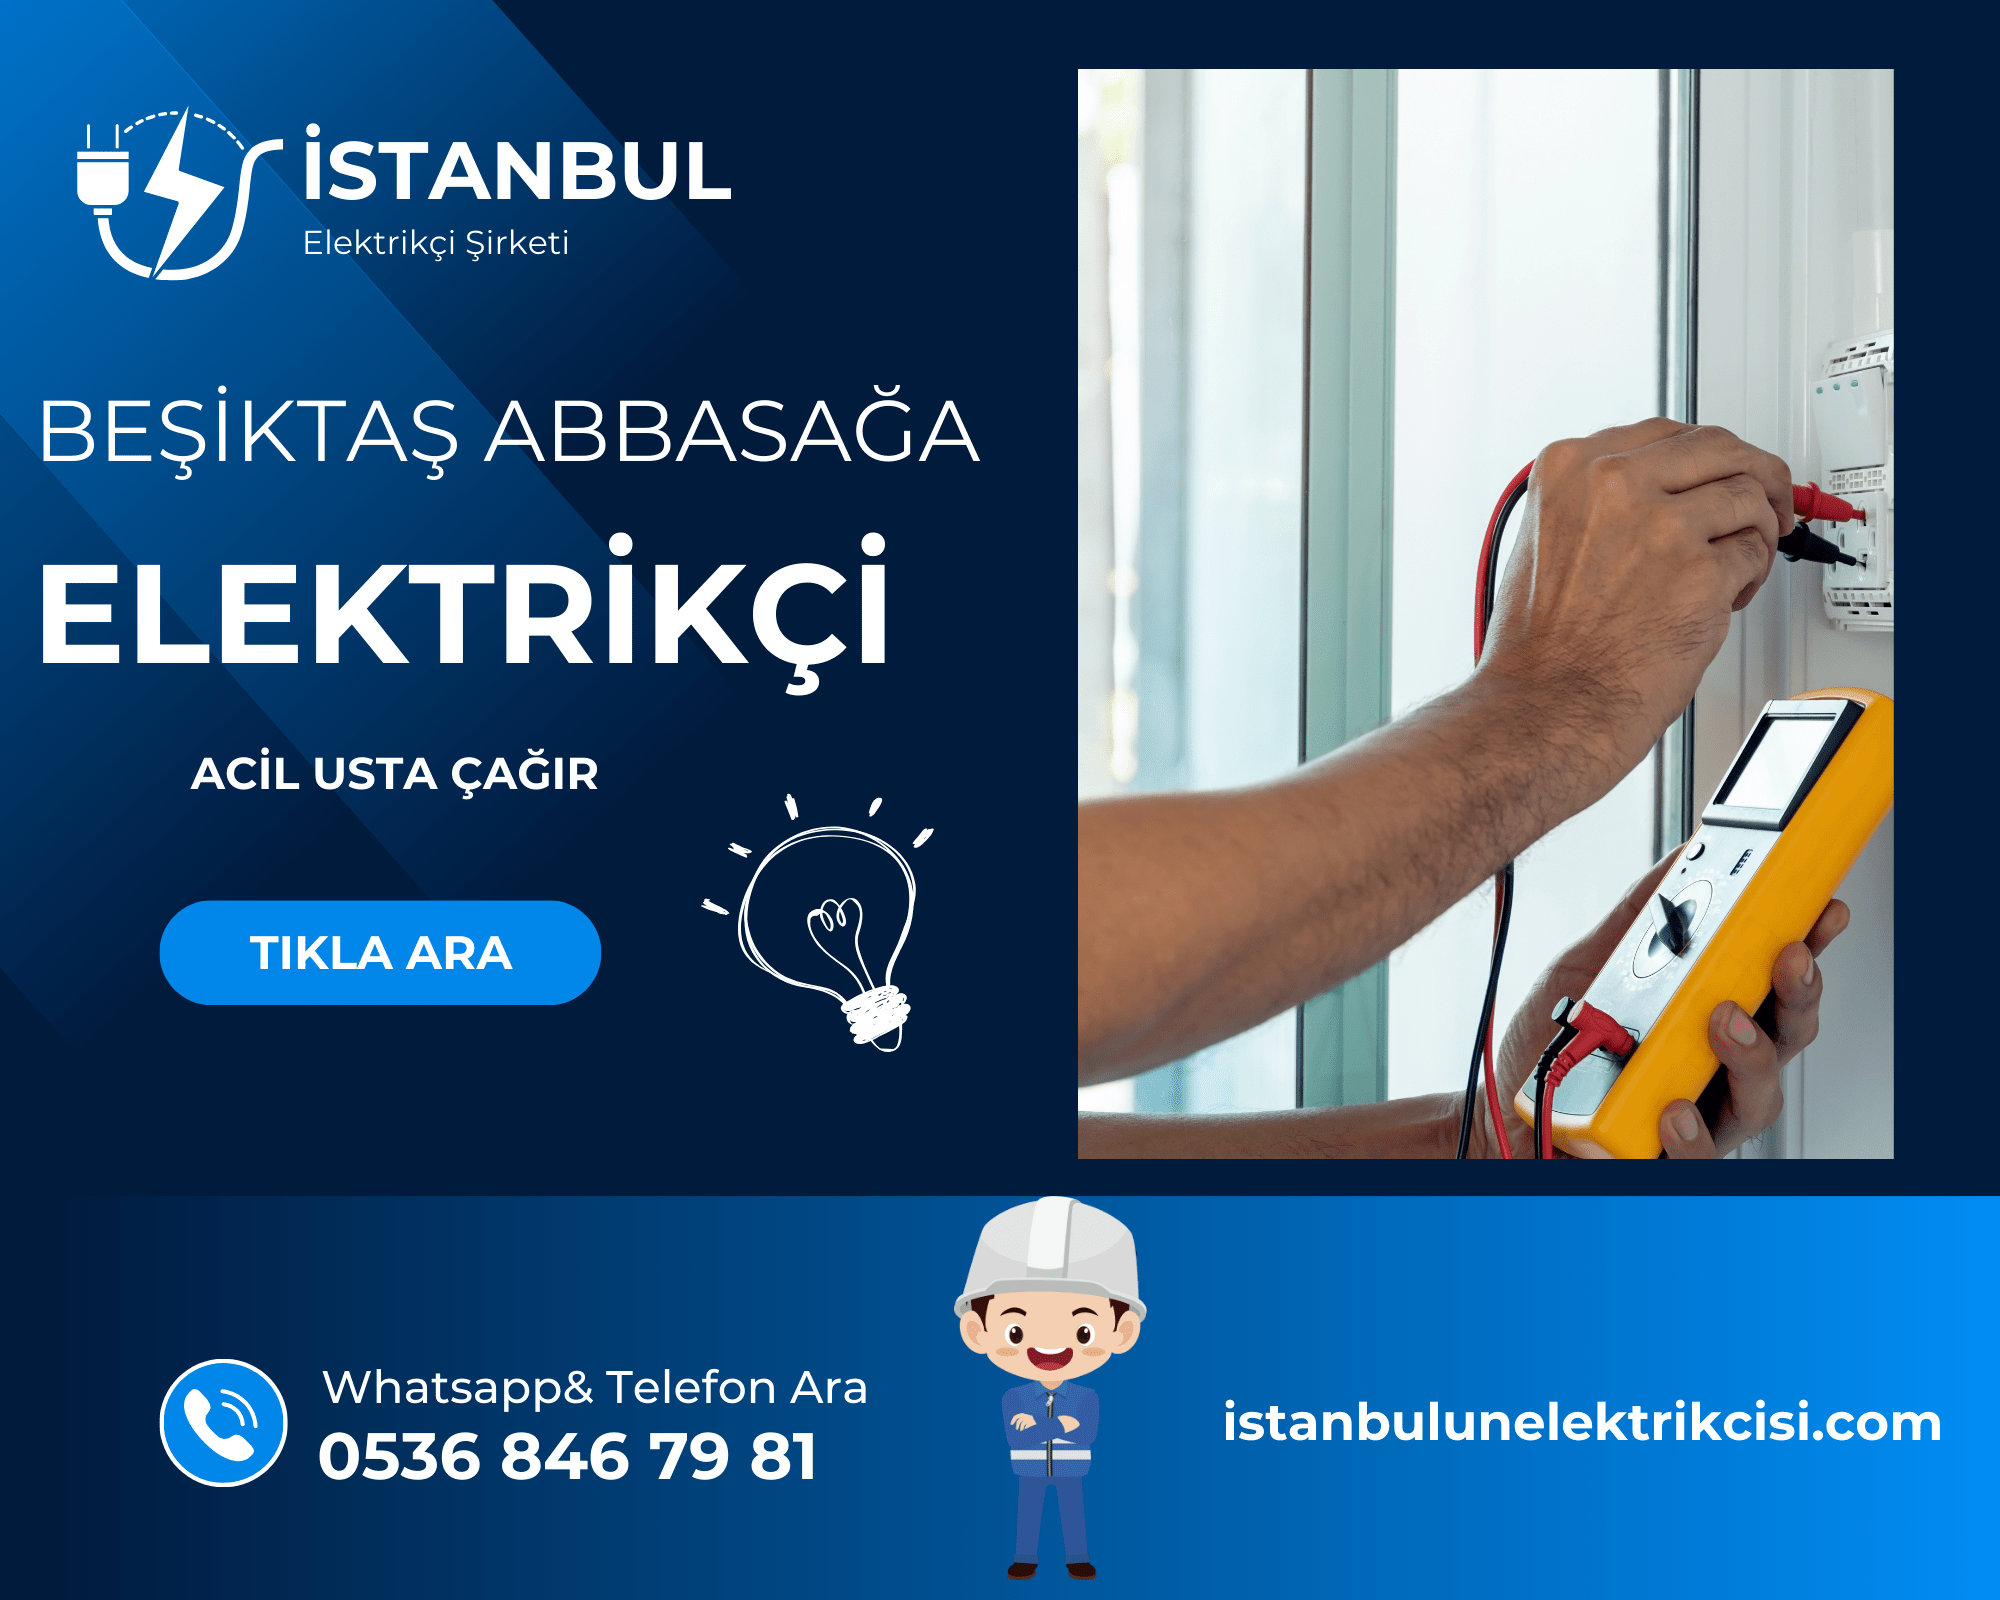 Beşiktaş Abbasağa Elektrikçi Servisi